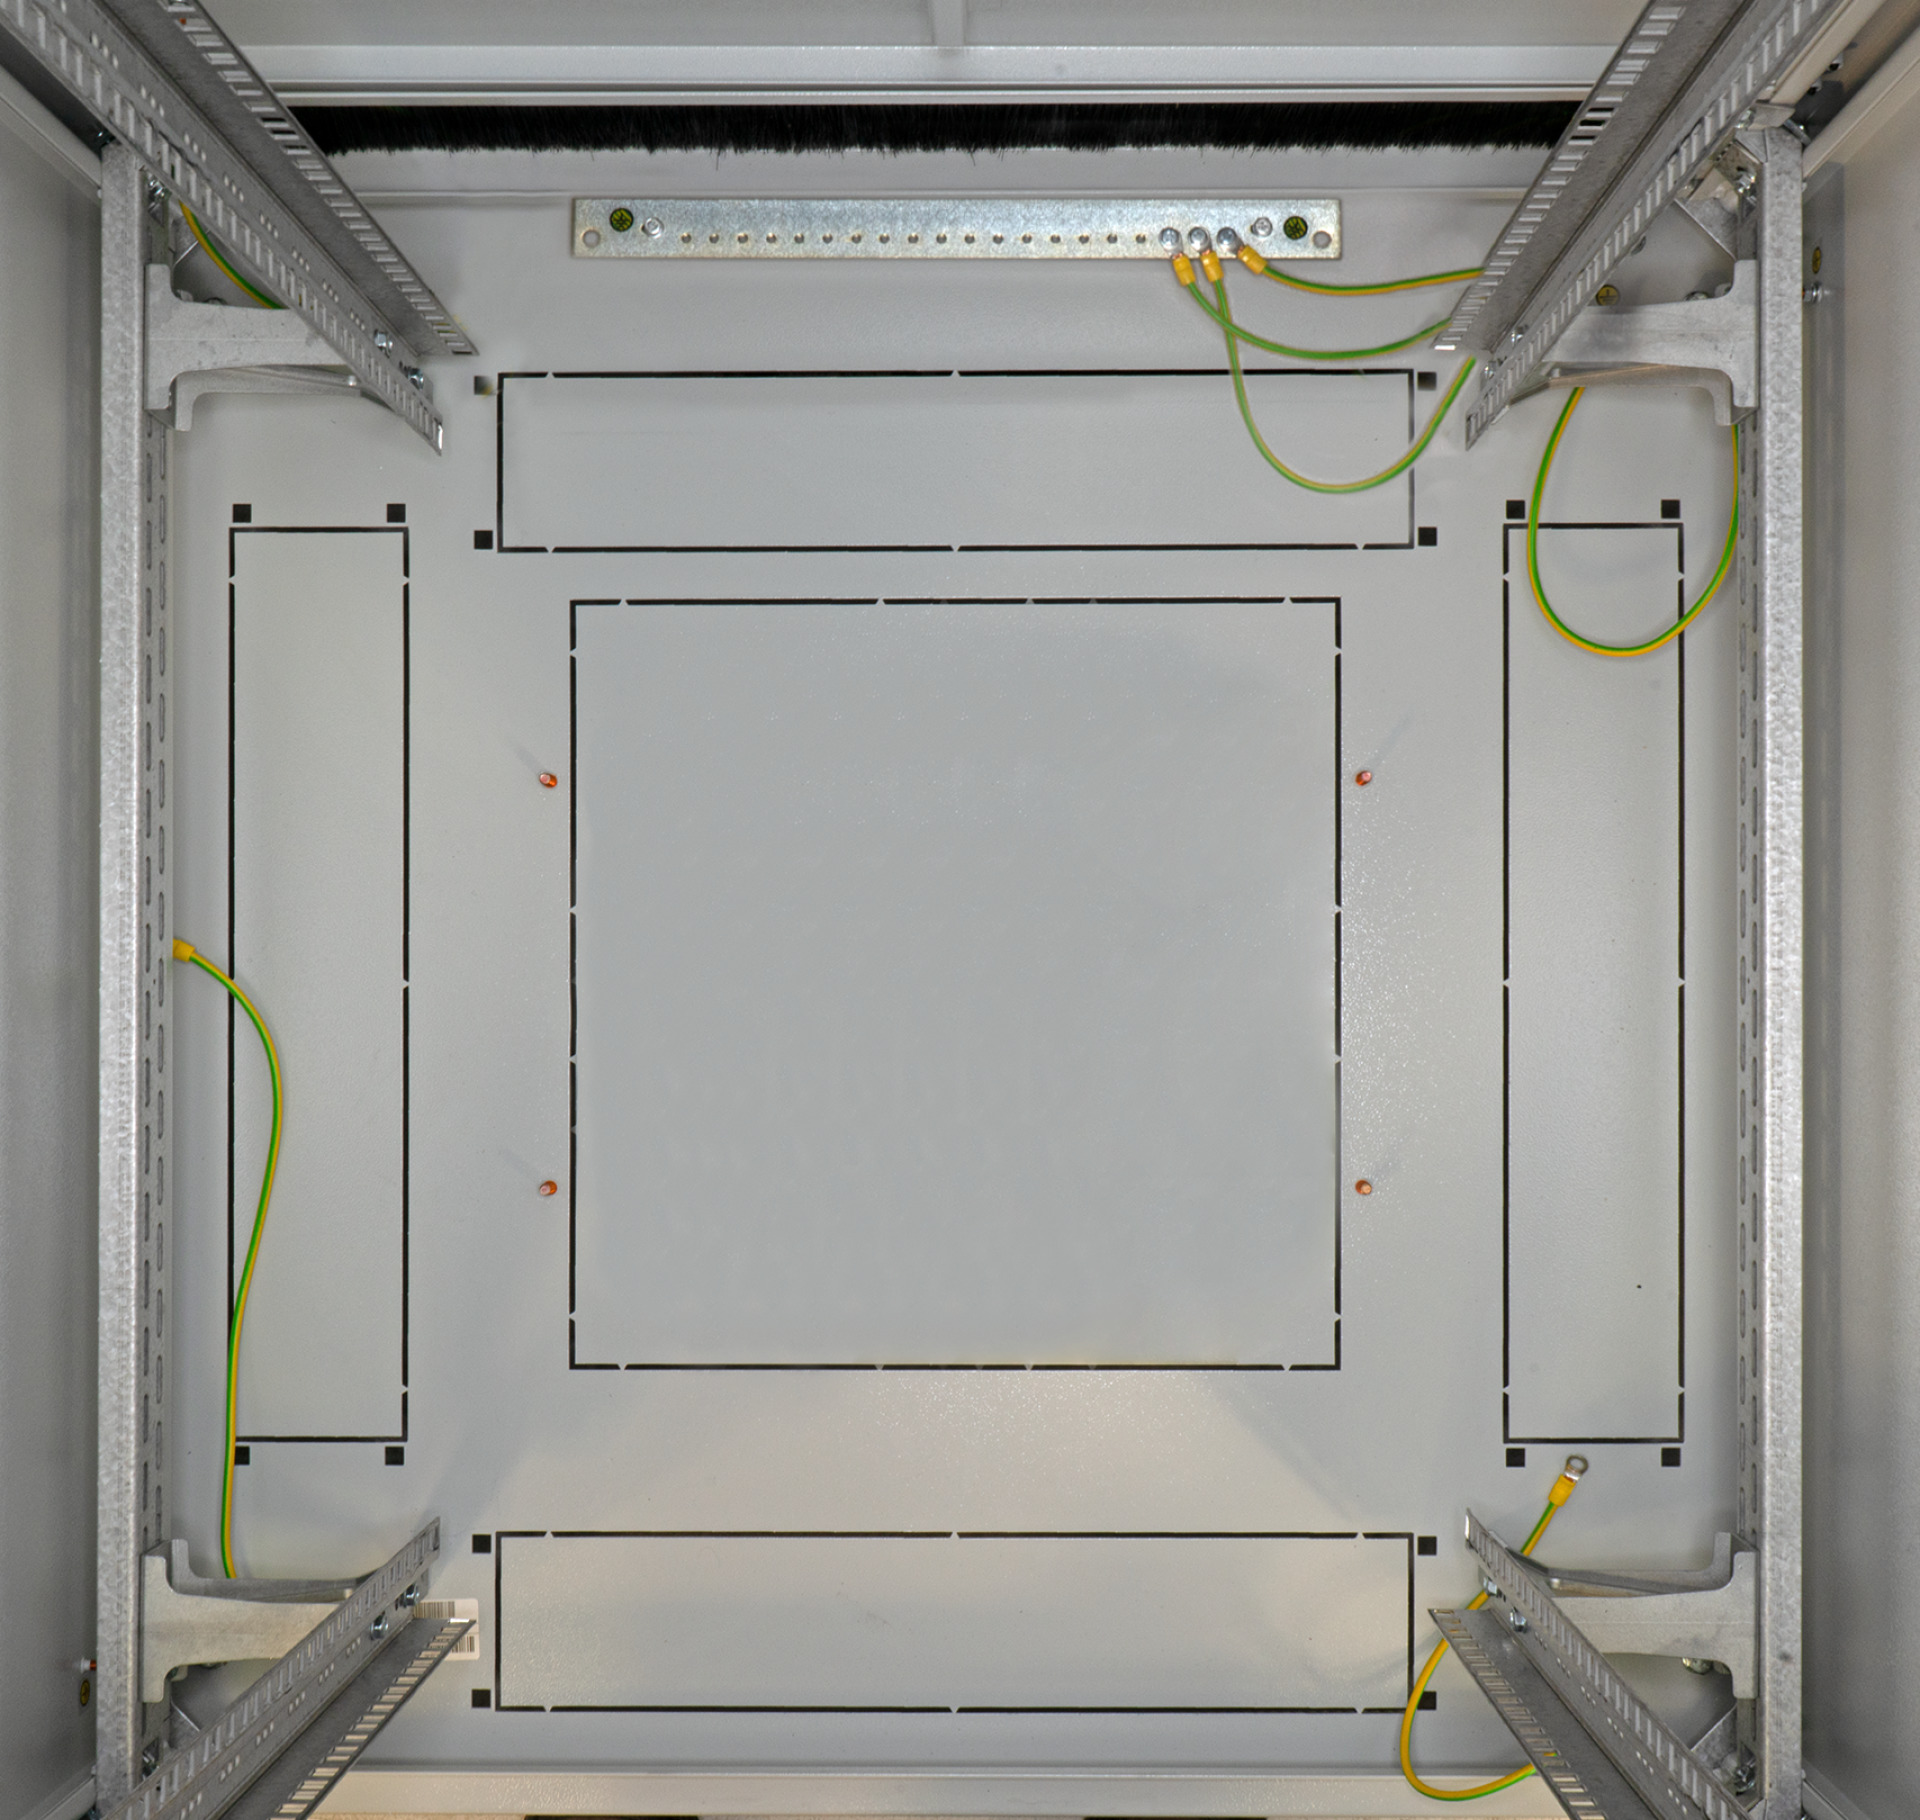 19" Network Cabinet PRO 42U, 600x800 mm, RAL7035